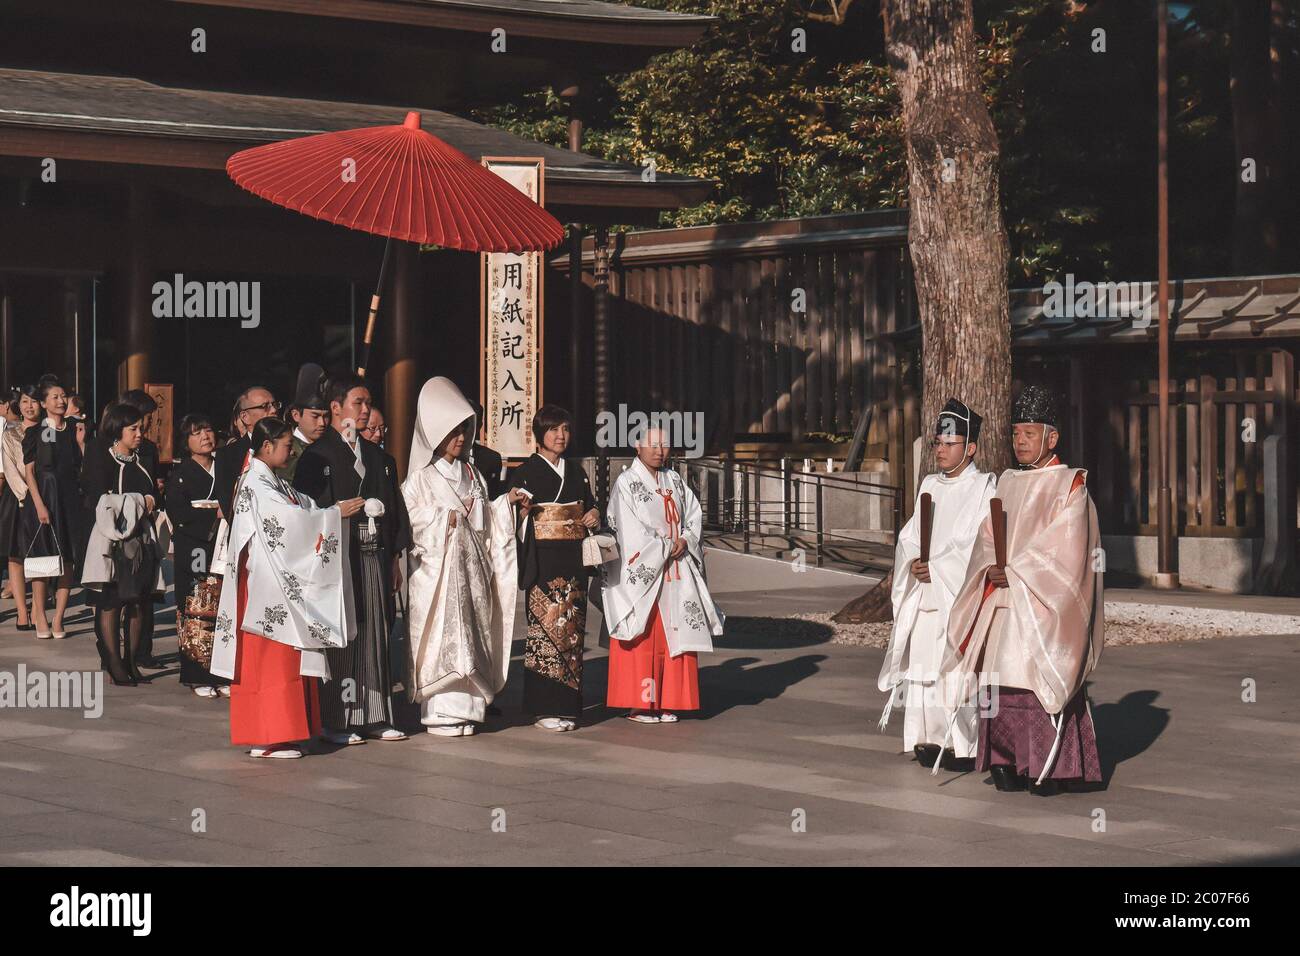 https://c8.alamy.com/comp/2C07F66/traditional-japanese-wedding-ceremony-at-meiji-jingu-shrinei-n-tokyo-japan-2C07F66.jpg